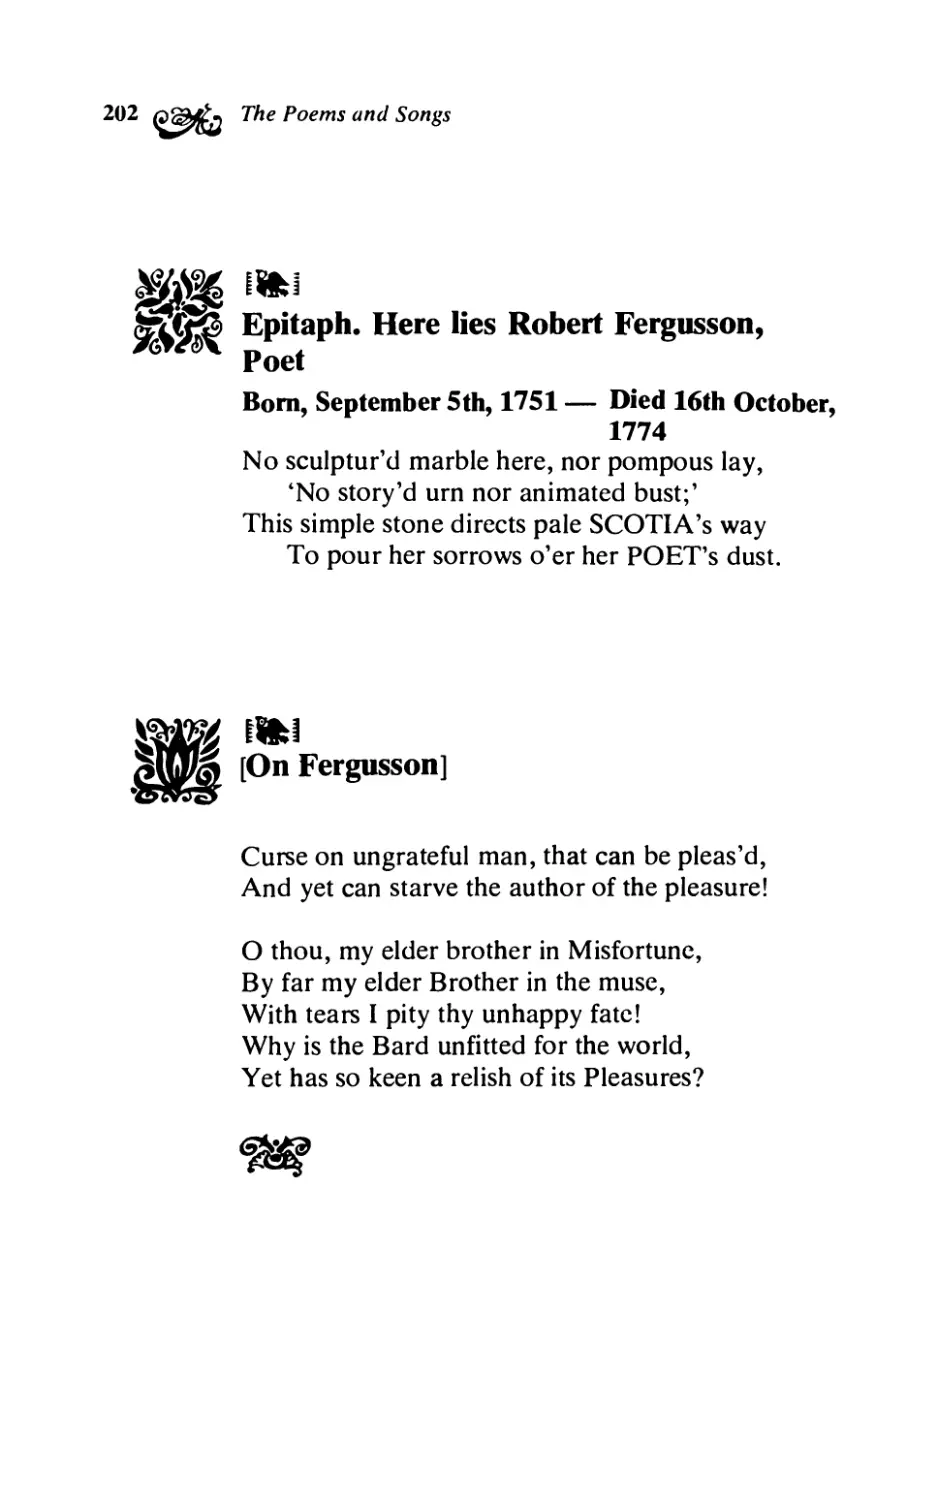 Epitaph. Here lies Robert Fergusson, Poet
On Fergusson